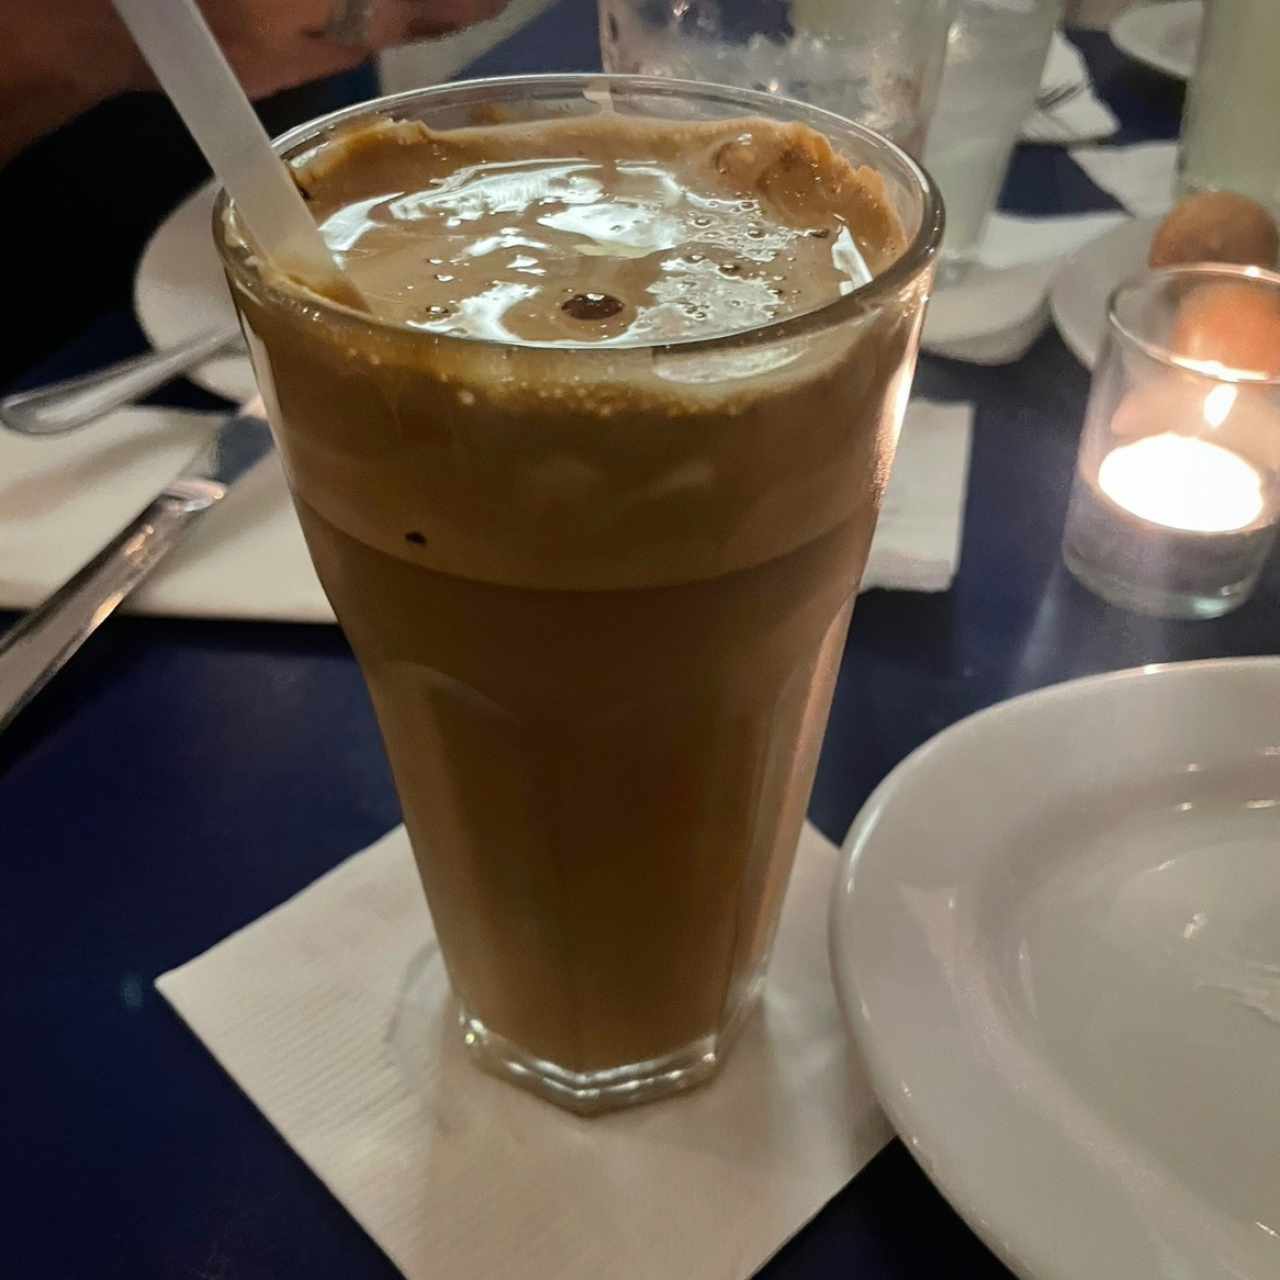 Cafe frio griego *muy fuerte para mi gusto*